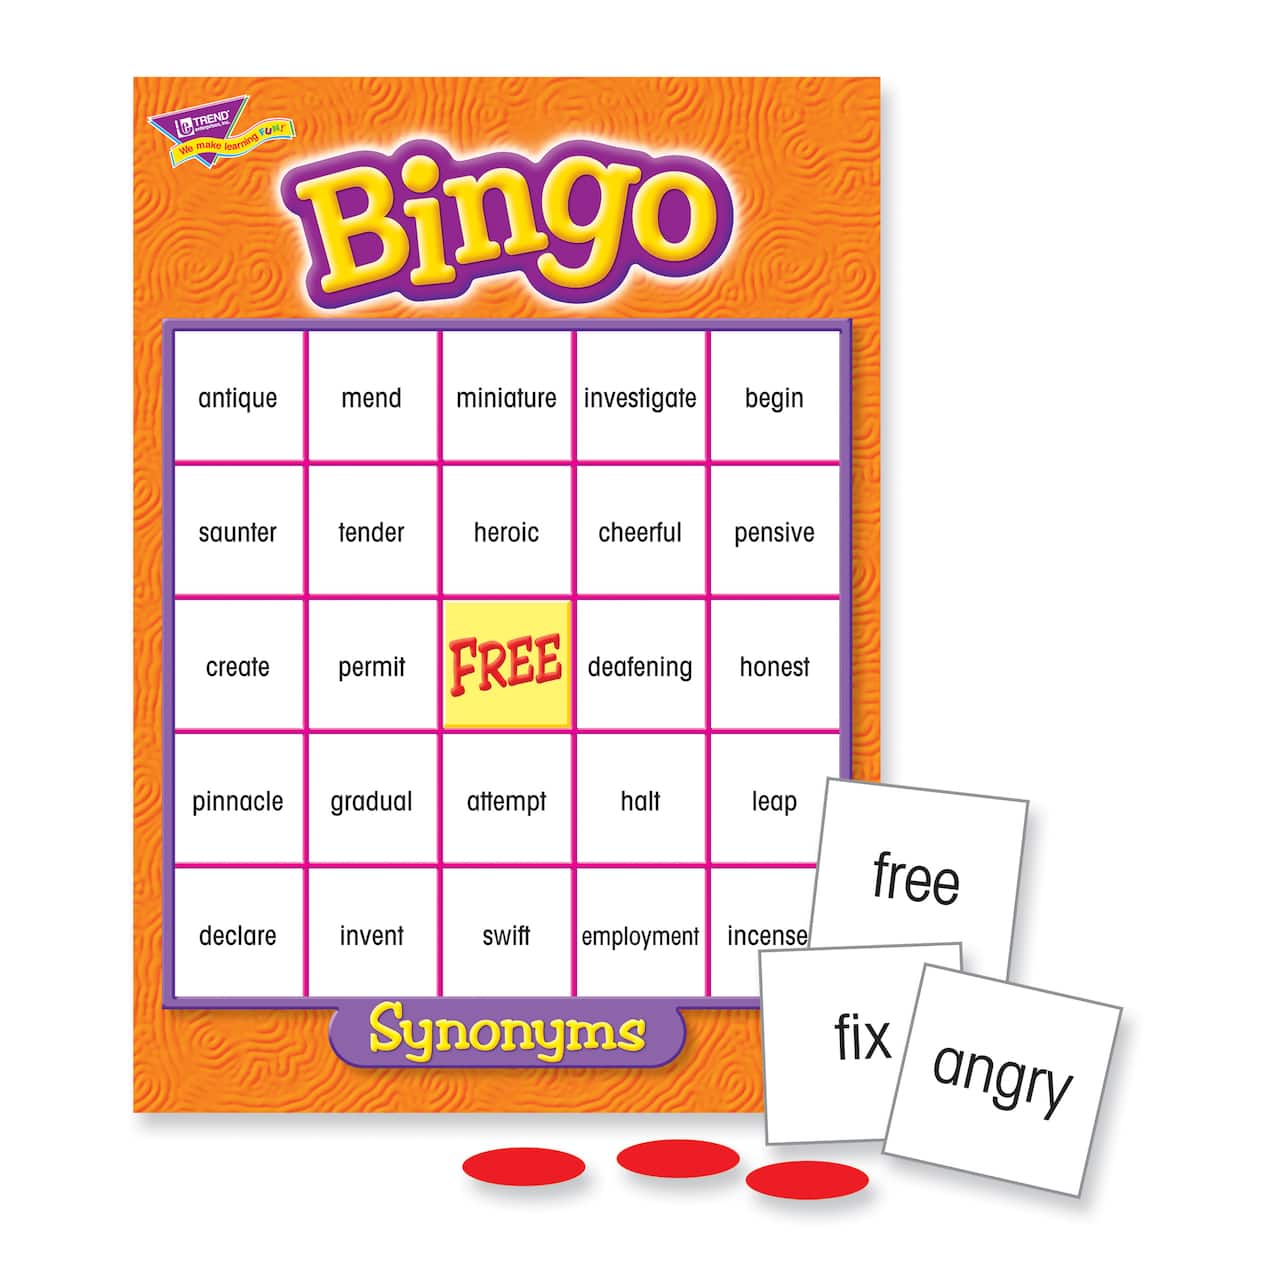 Synonyms Bingo Game